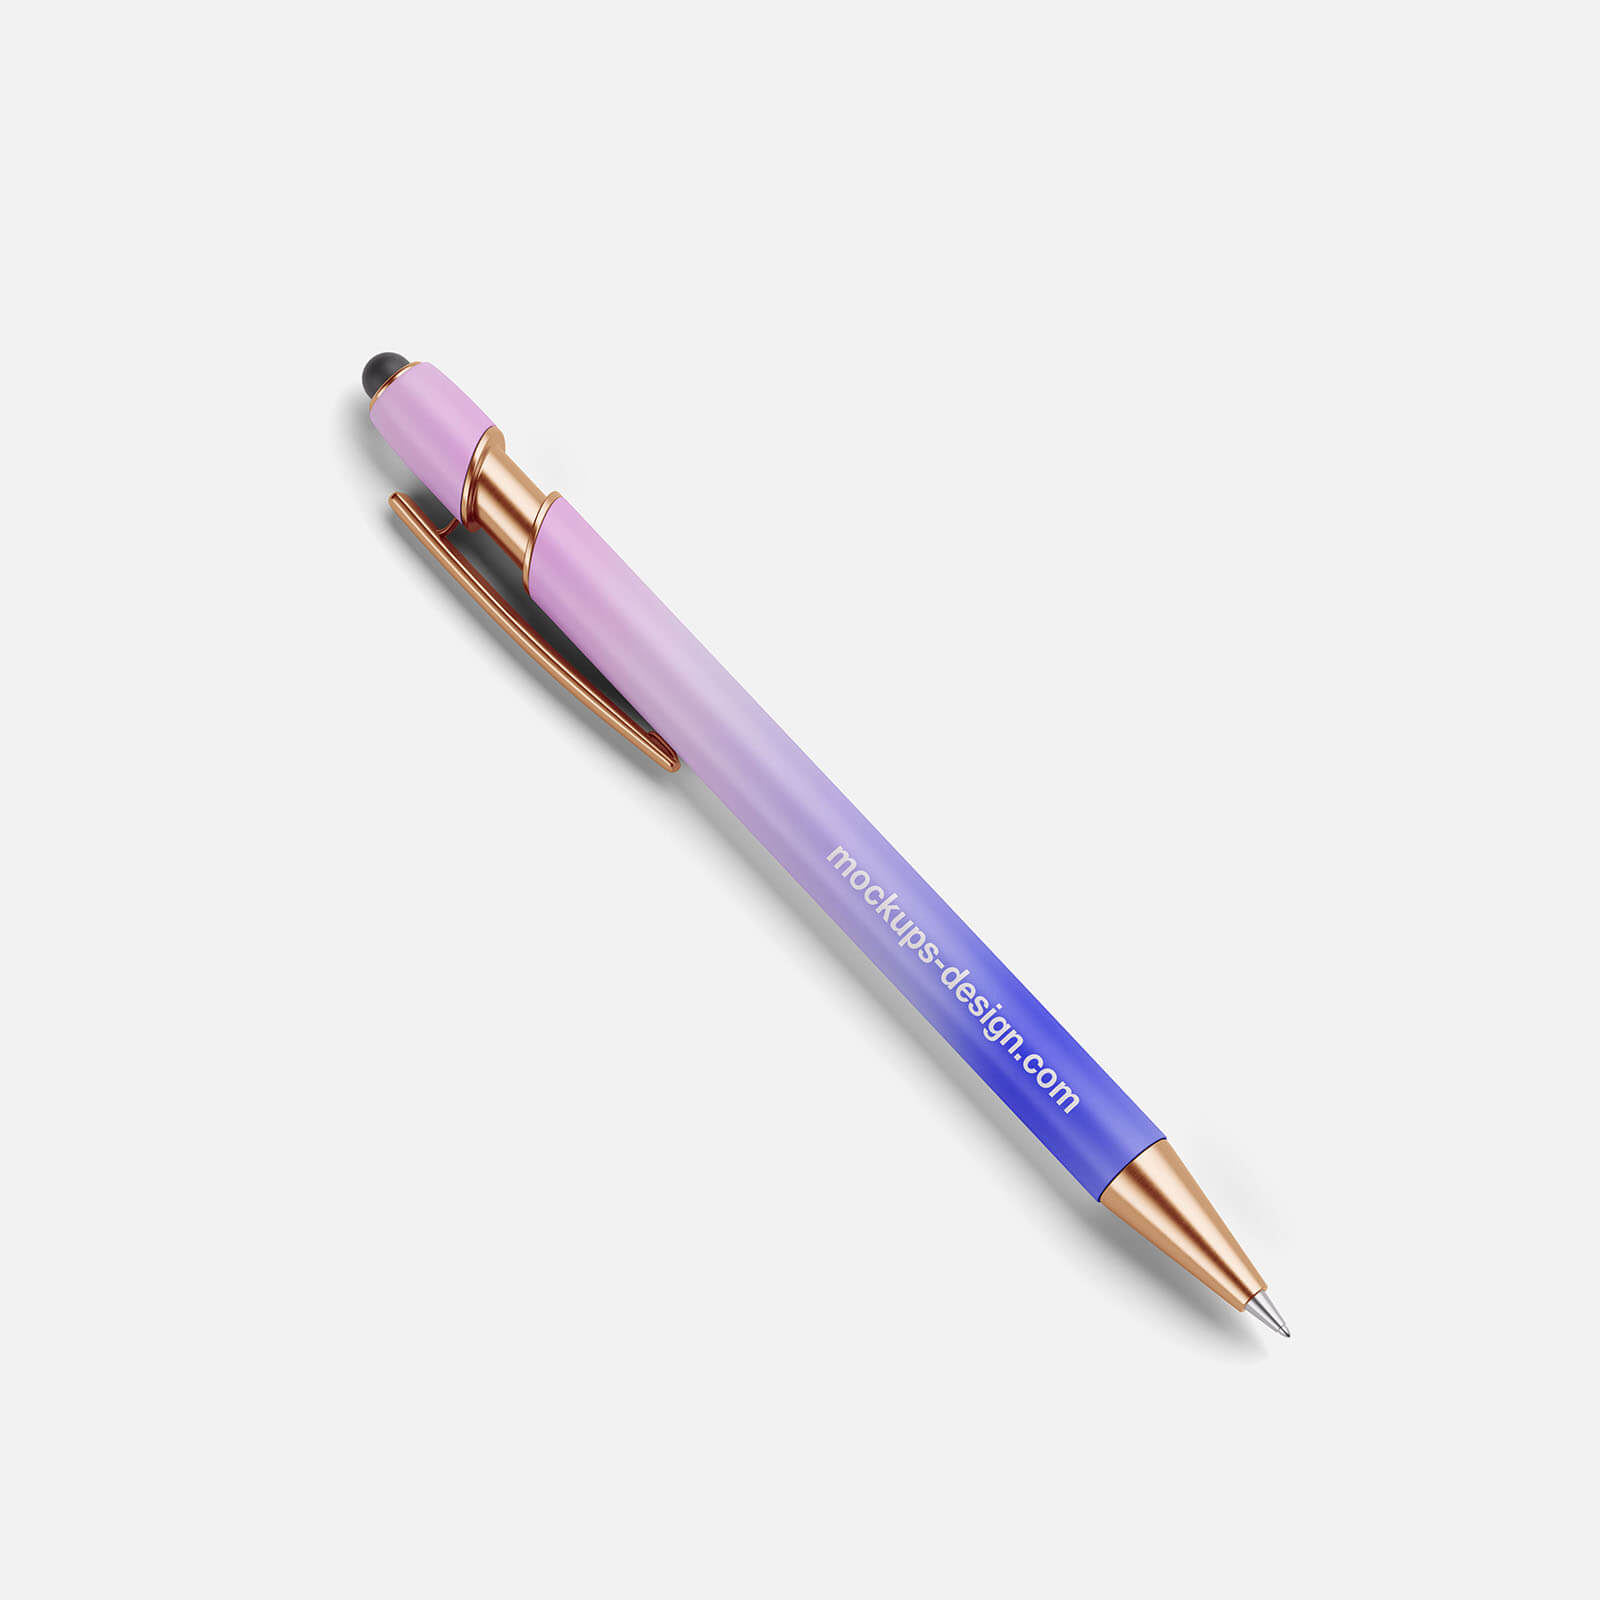 Free Ballpoint Pen With Stylus Mockup PSD Set